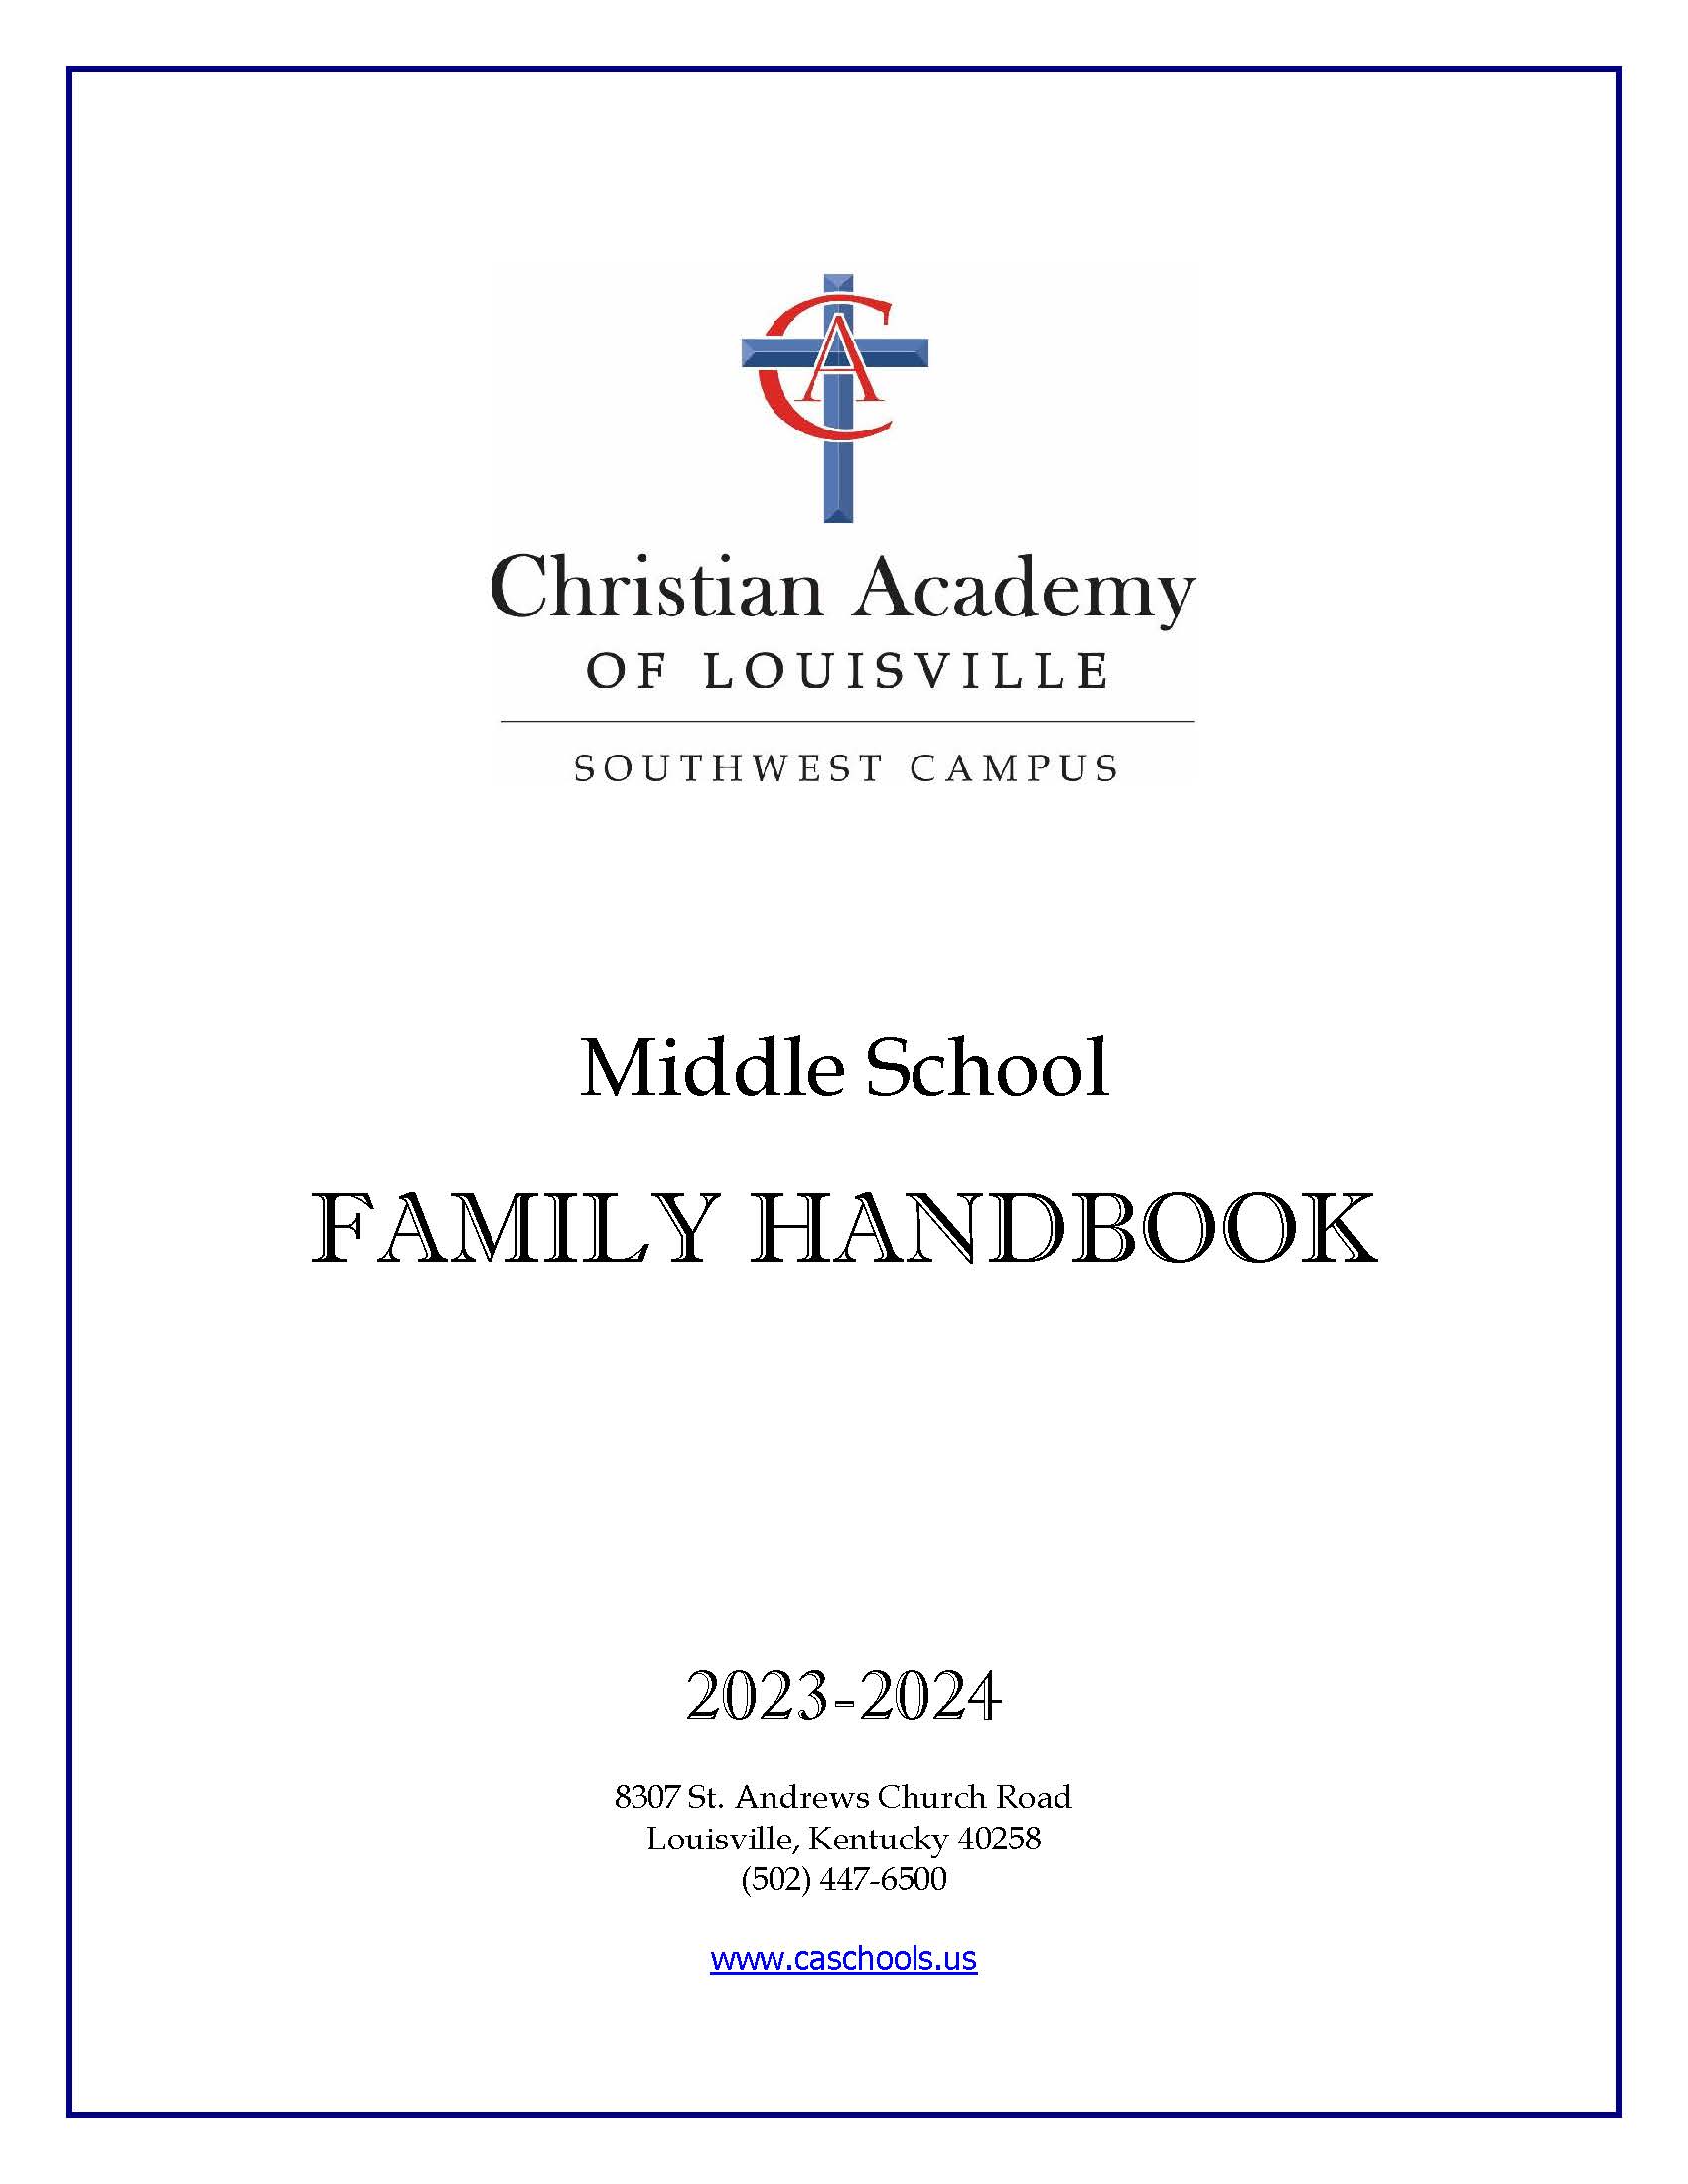 Christian Academy School System | Christian Academy of Louisville | Southwest Middle School | 2023-2024 Family Handbook